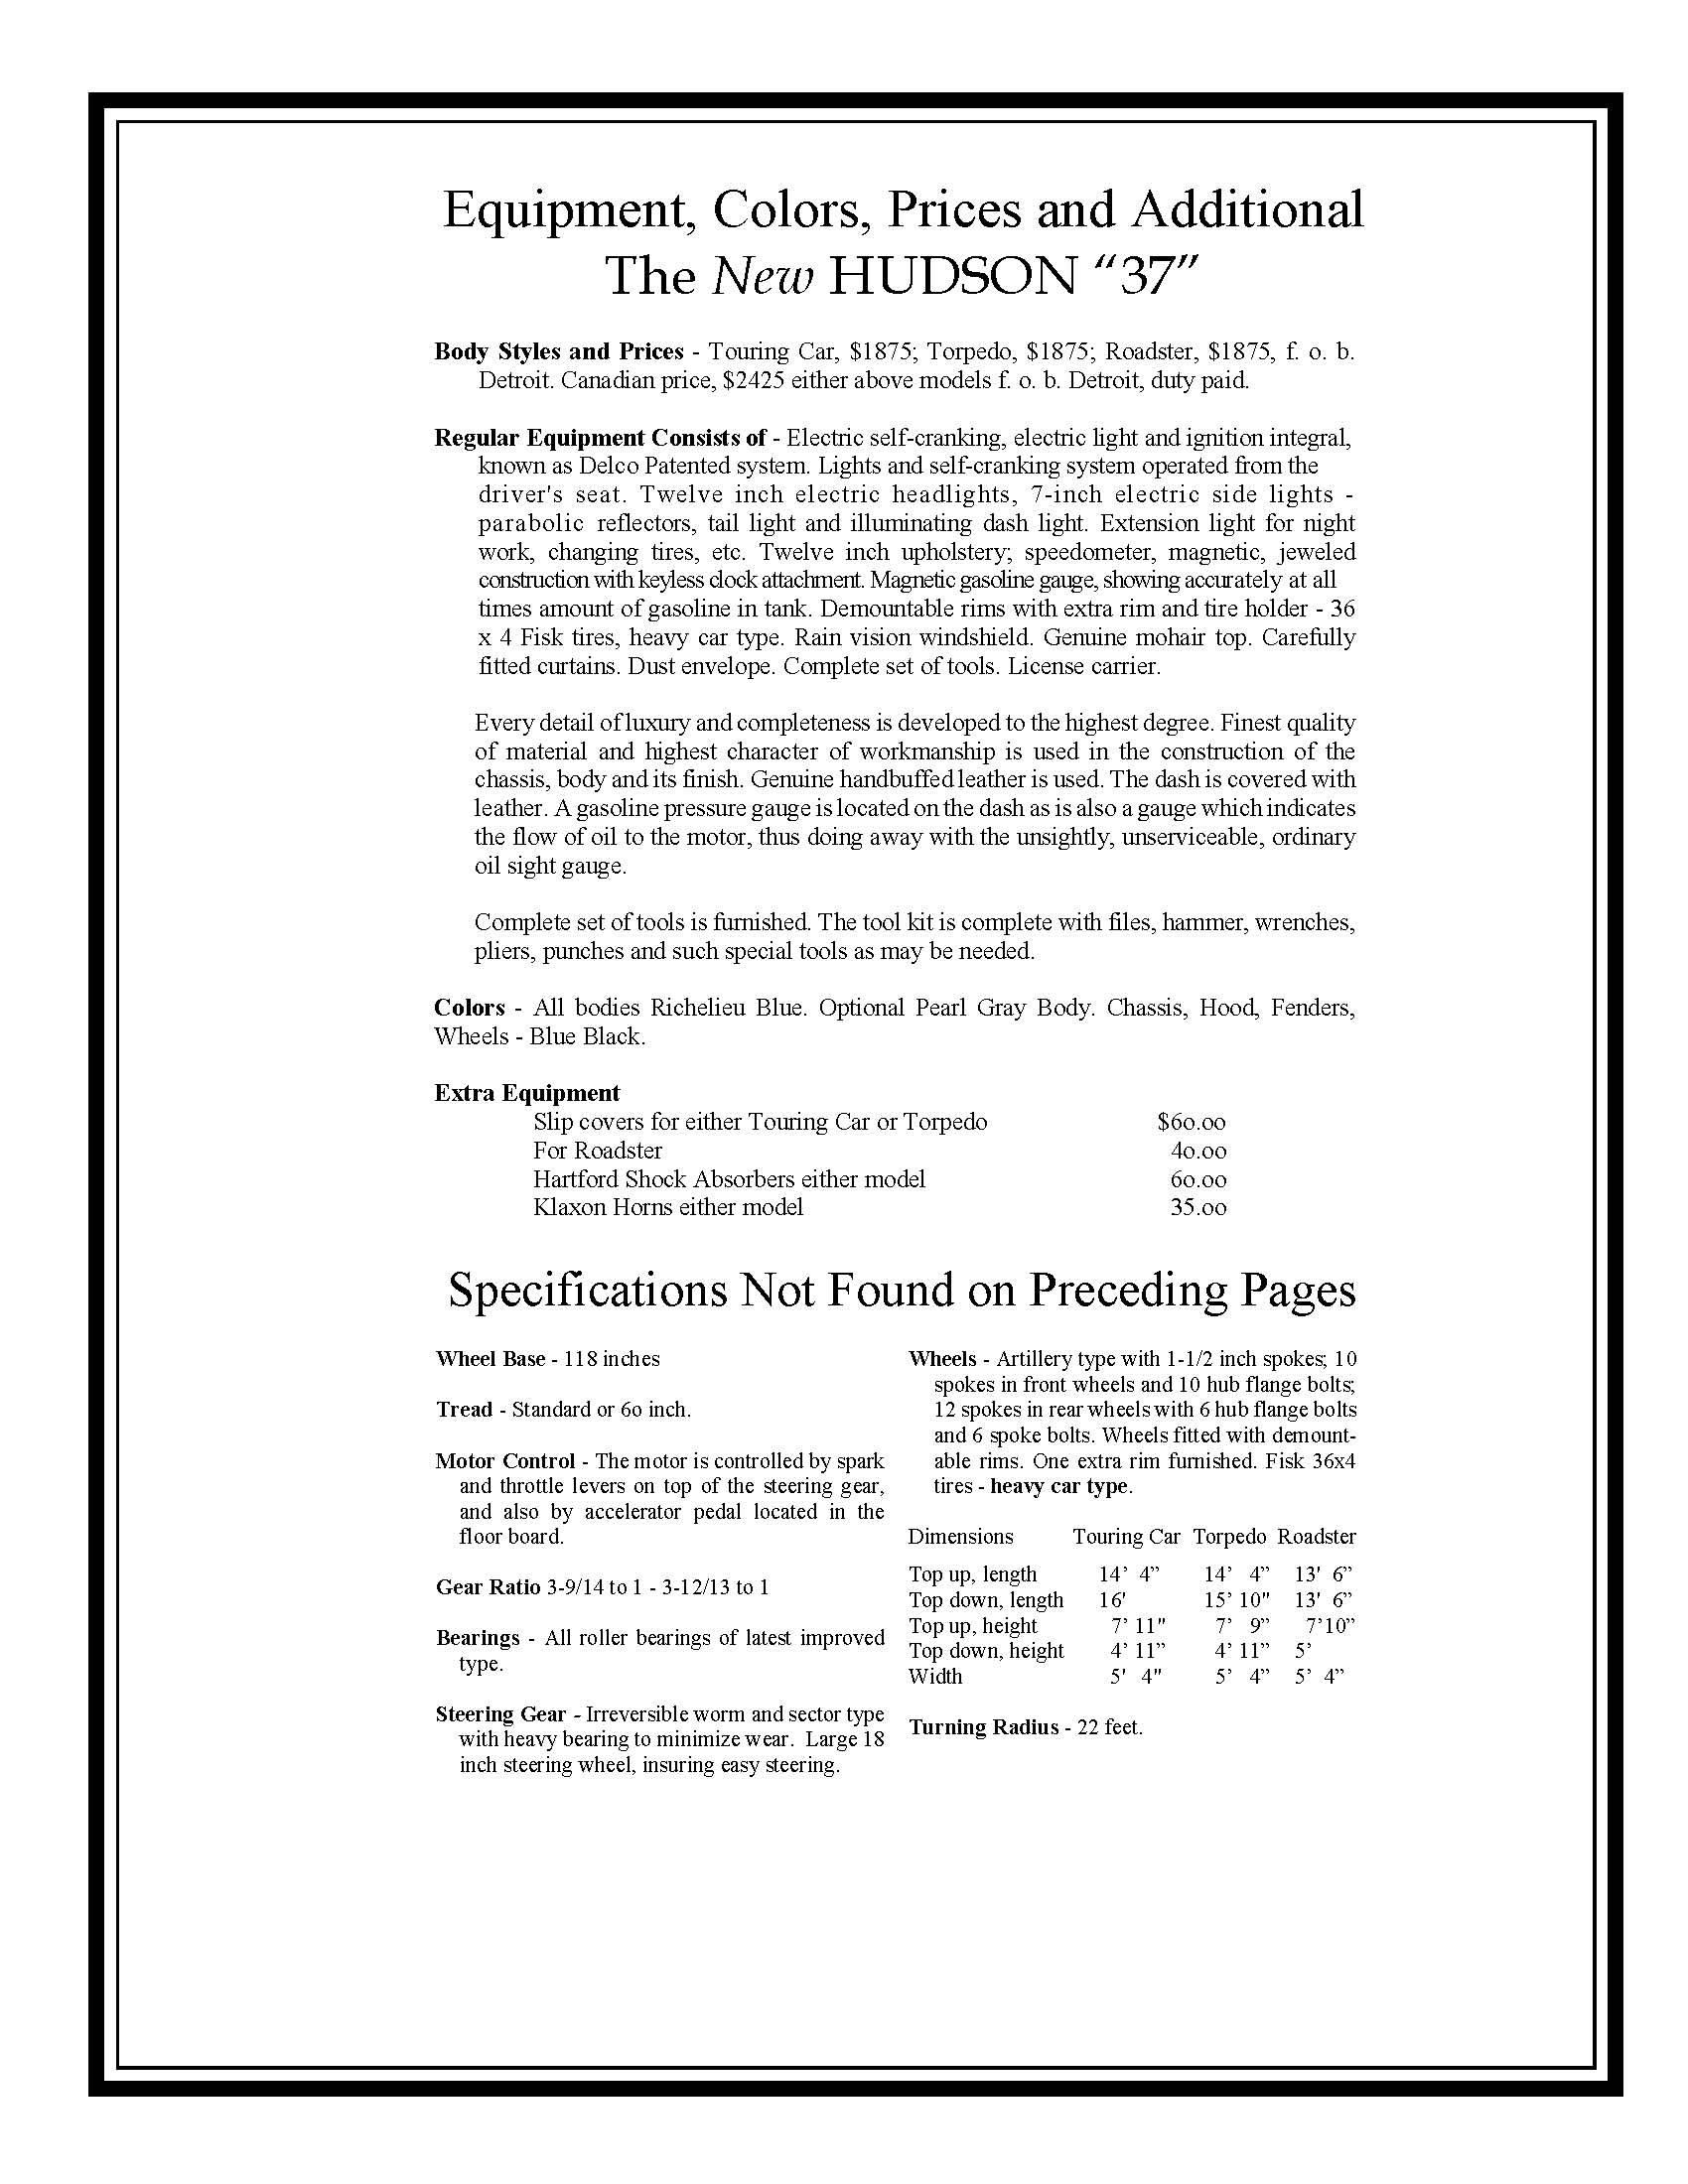 1913 Hudson Instruction Book-17